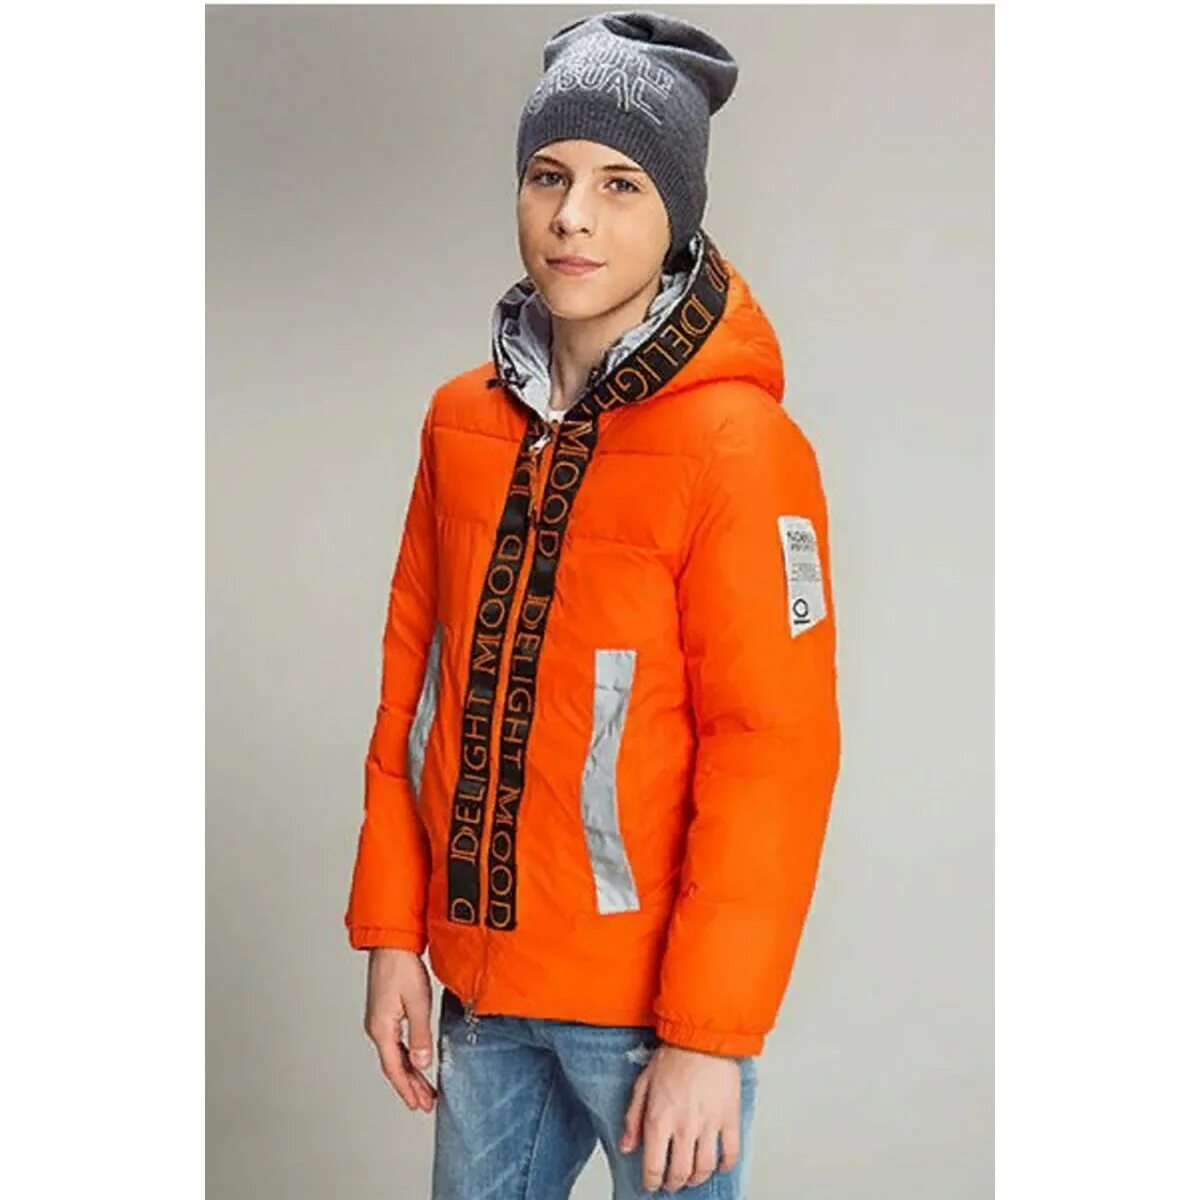 Noble people куртка демисезонная. Нобле пипл оранжевая куртка. Куртка talvi для мальчика оранжевая 2014. Оранжевая куртка для мальчика. Куртка для мальчика 146